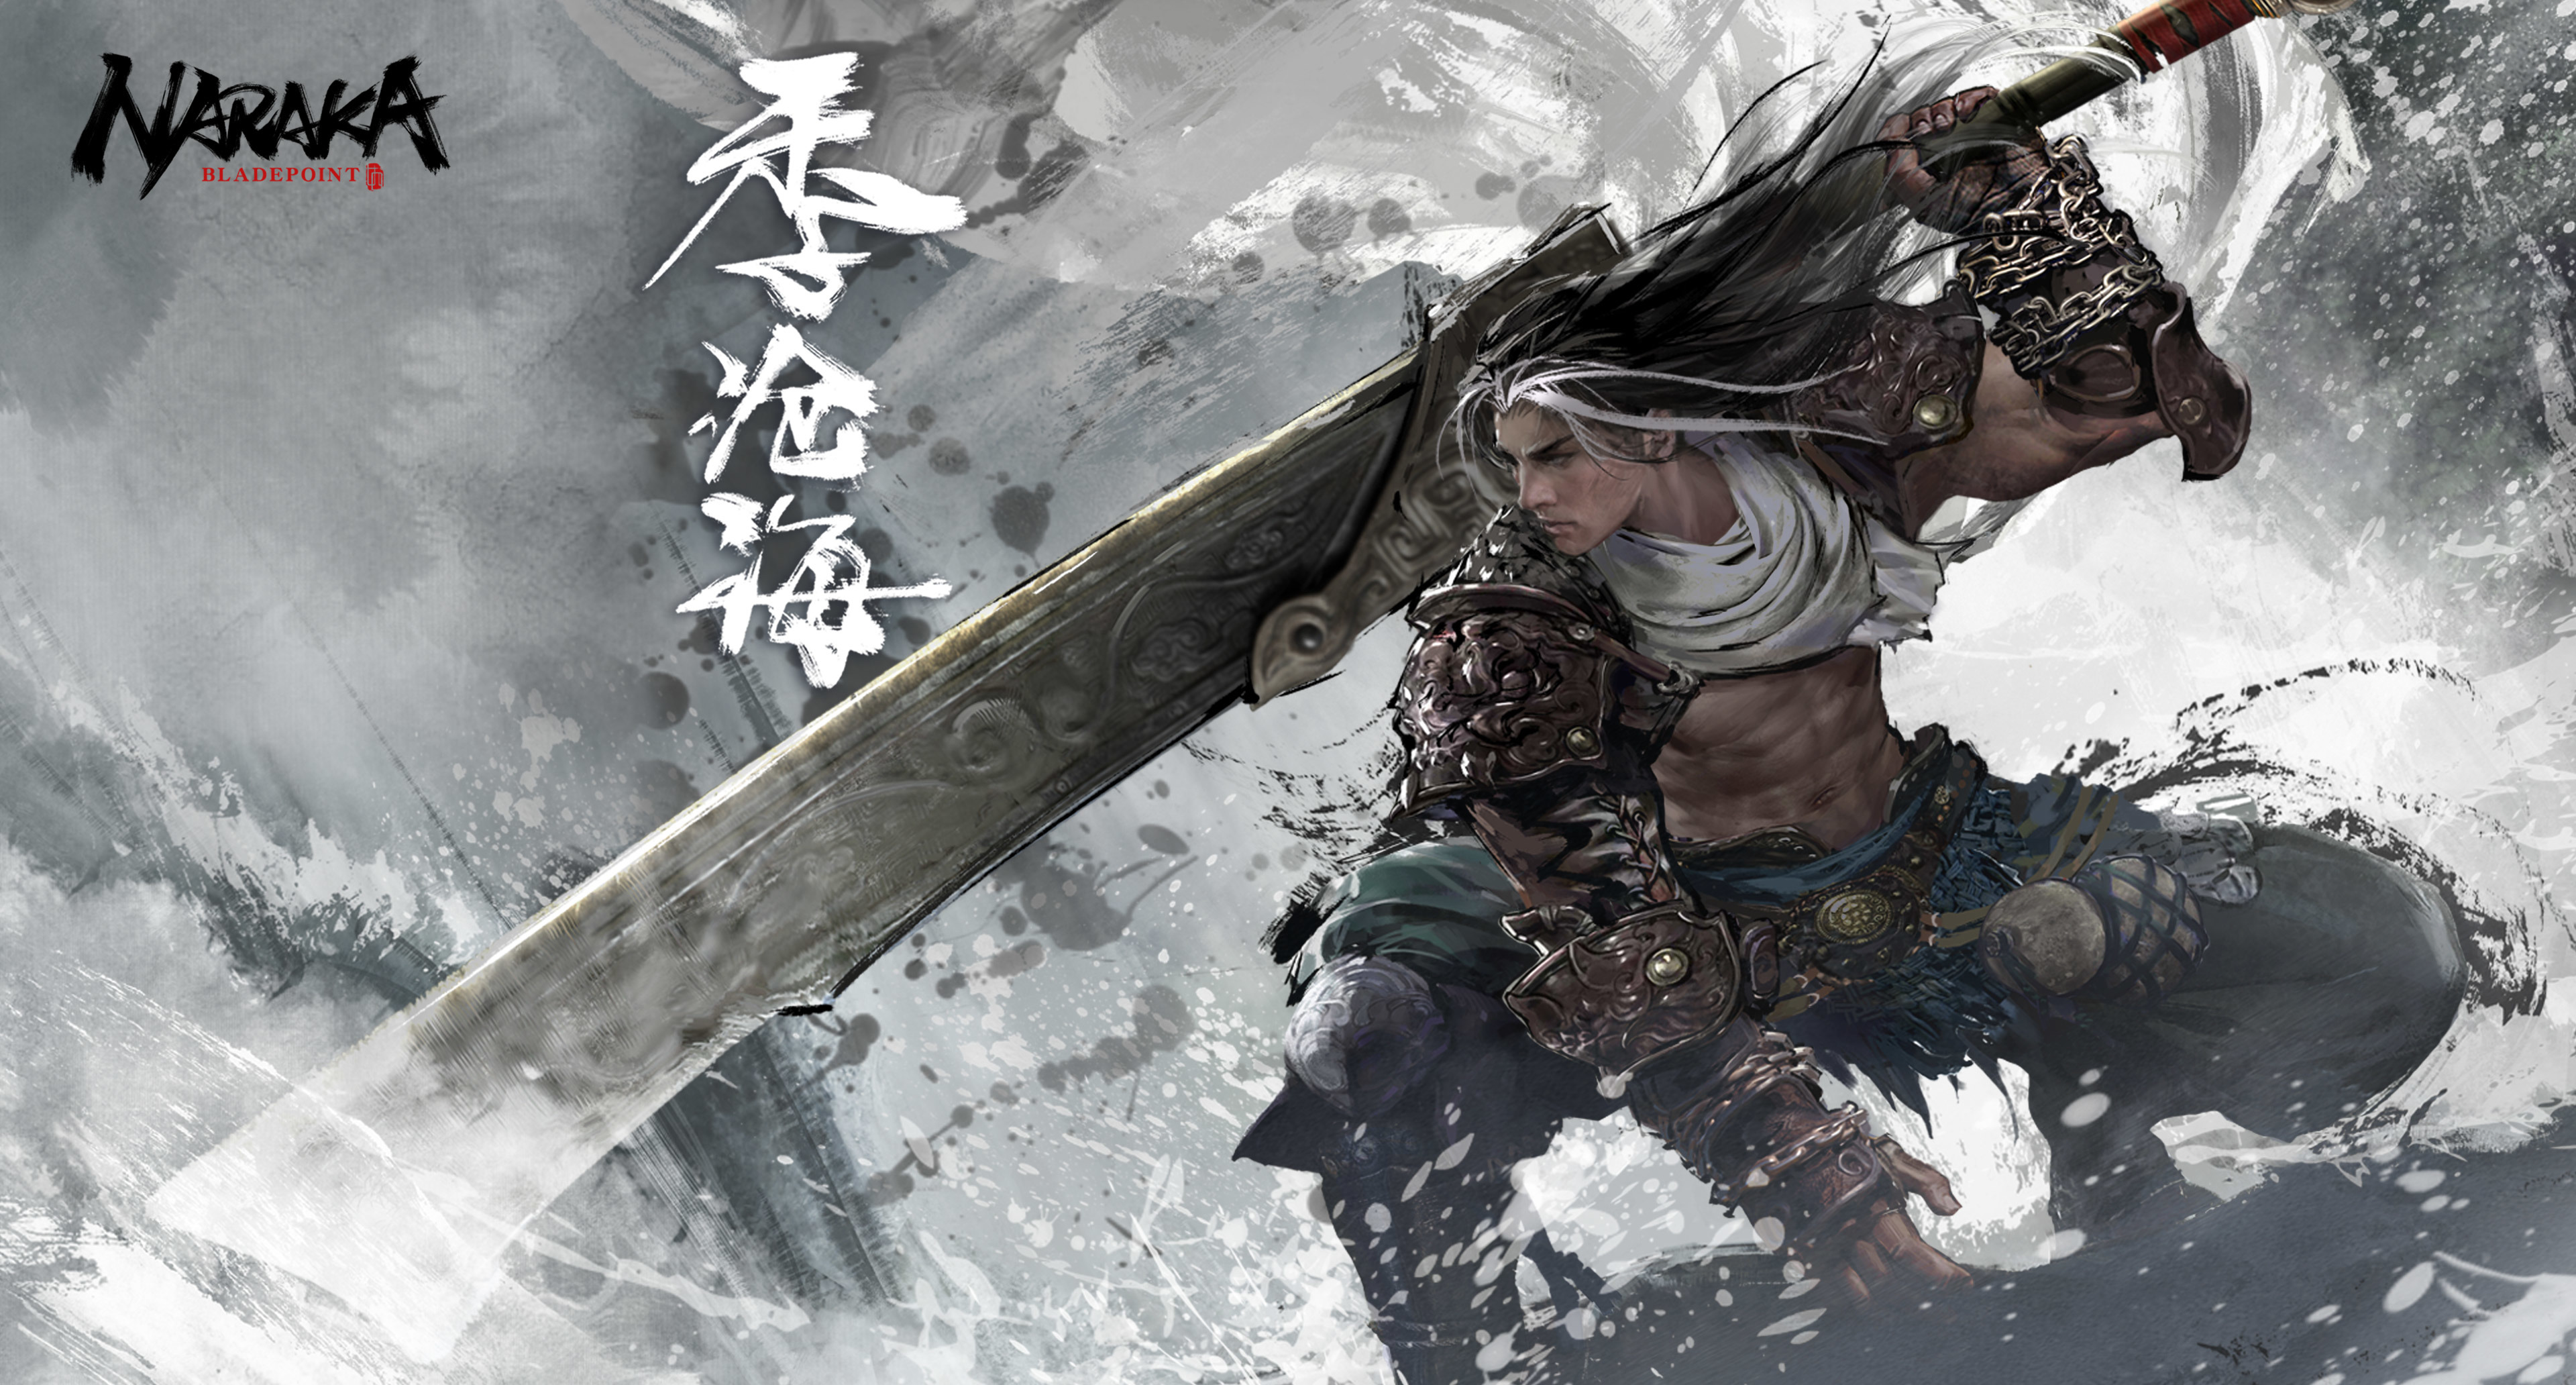 General 3840x2064 Naraka: Bladepoint video games warrior video game characters muscular video game men fantasy men dark hair long hair sword weapon Wuxia